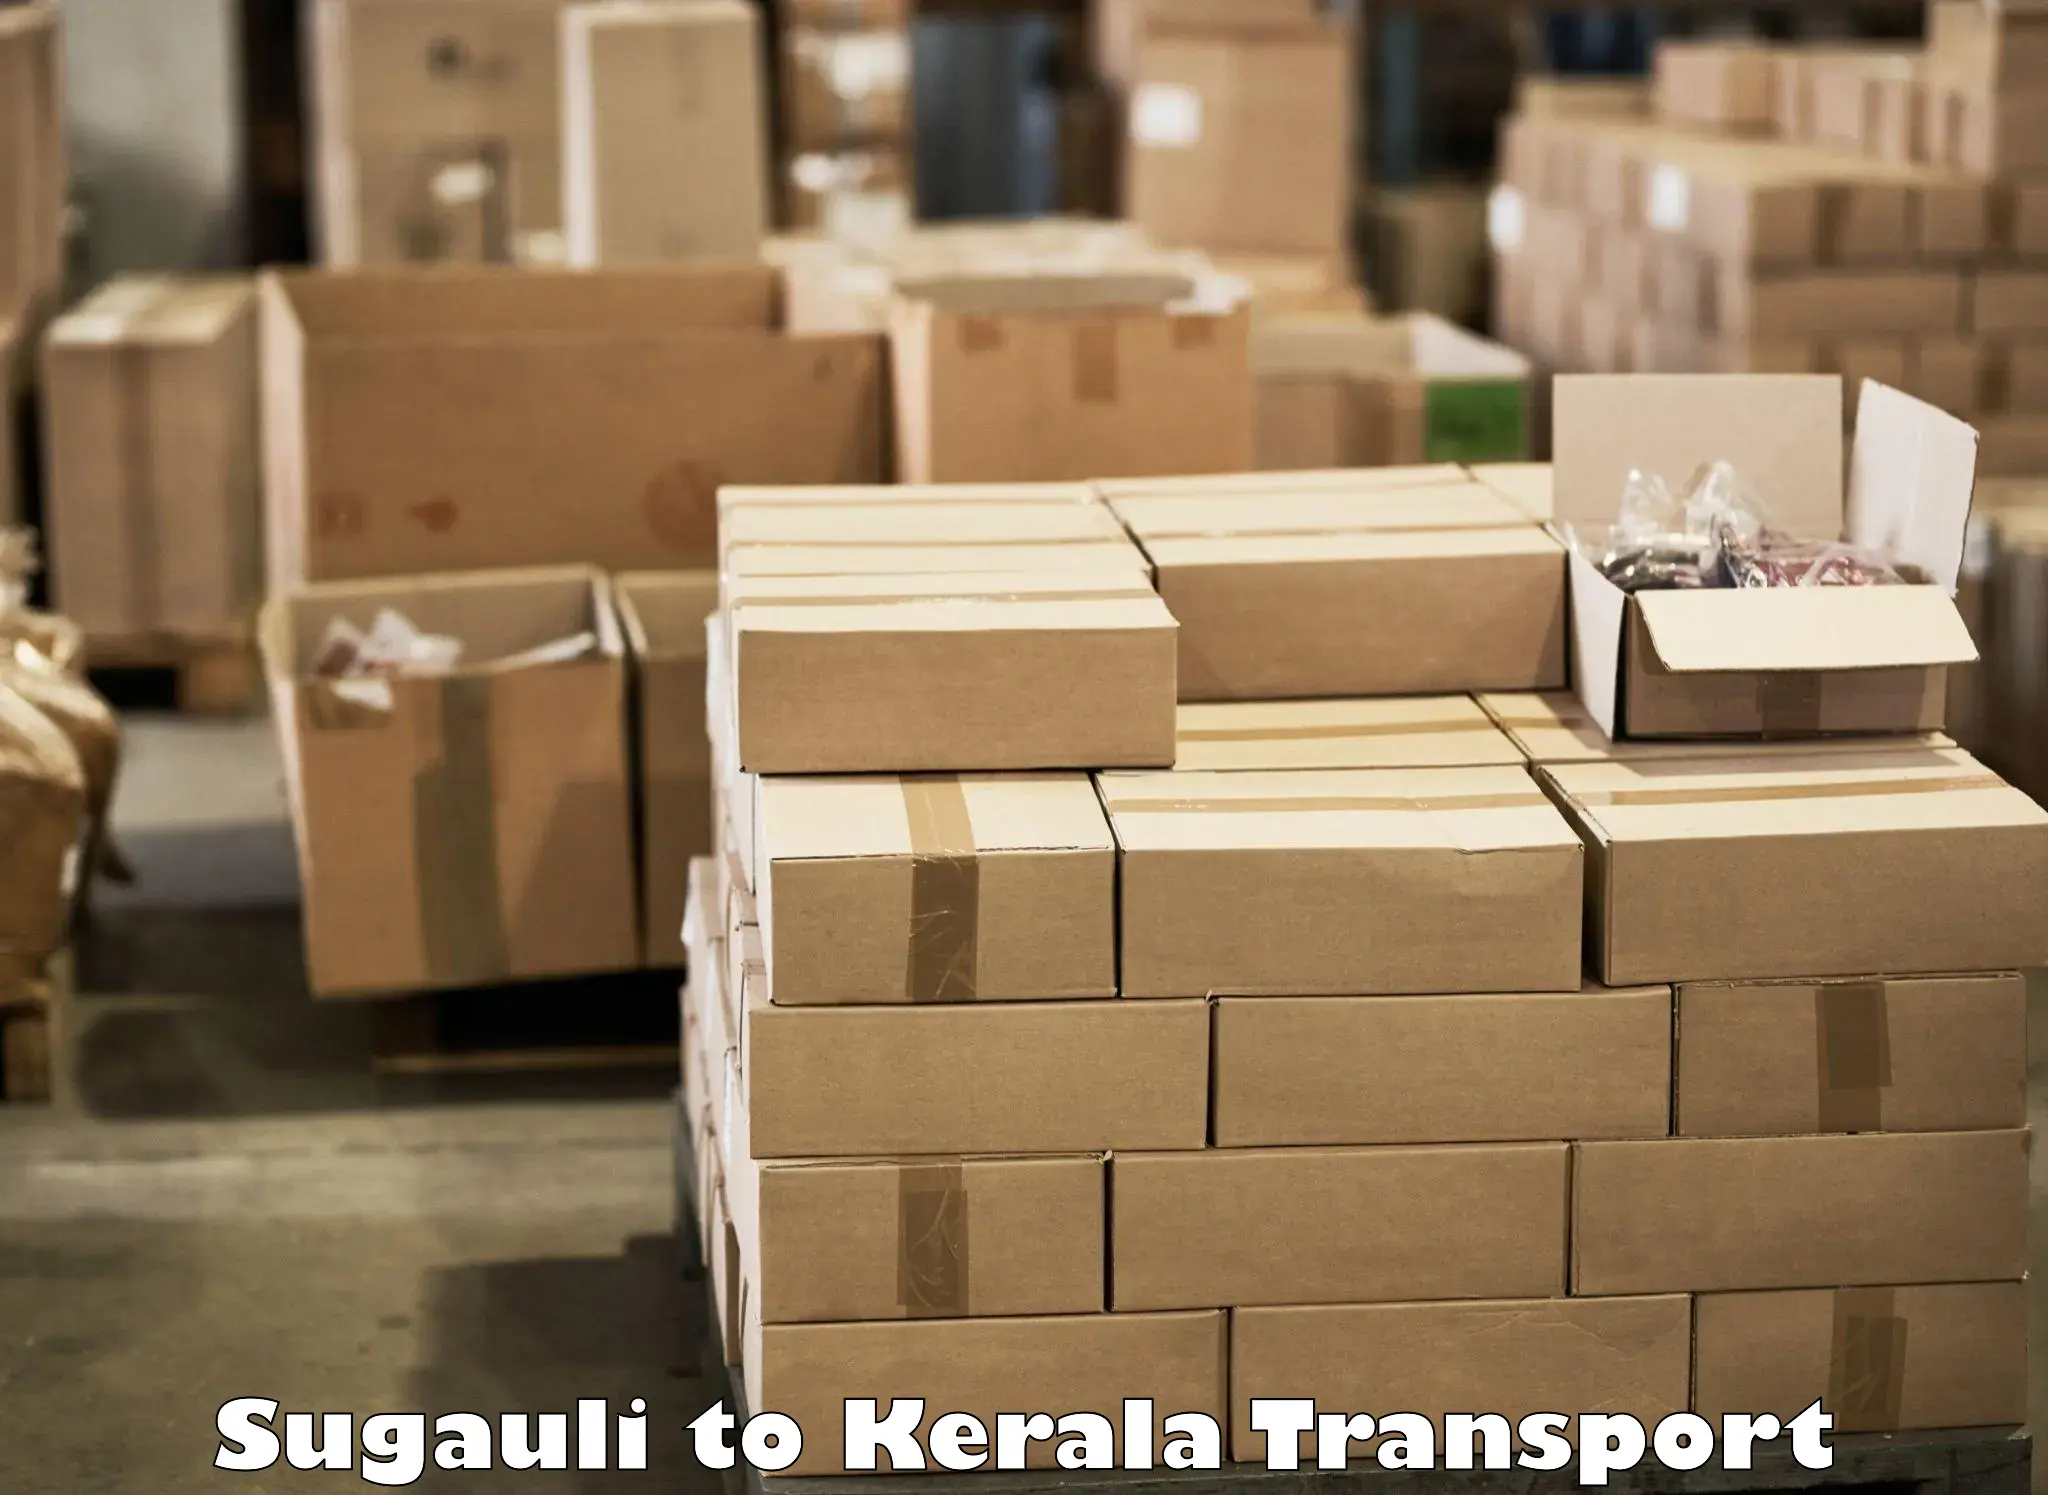 Transport in sharing in Sugauli to Pala